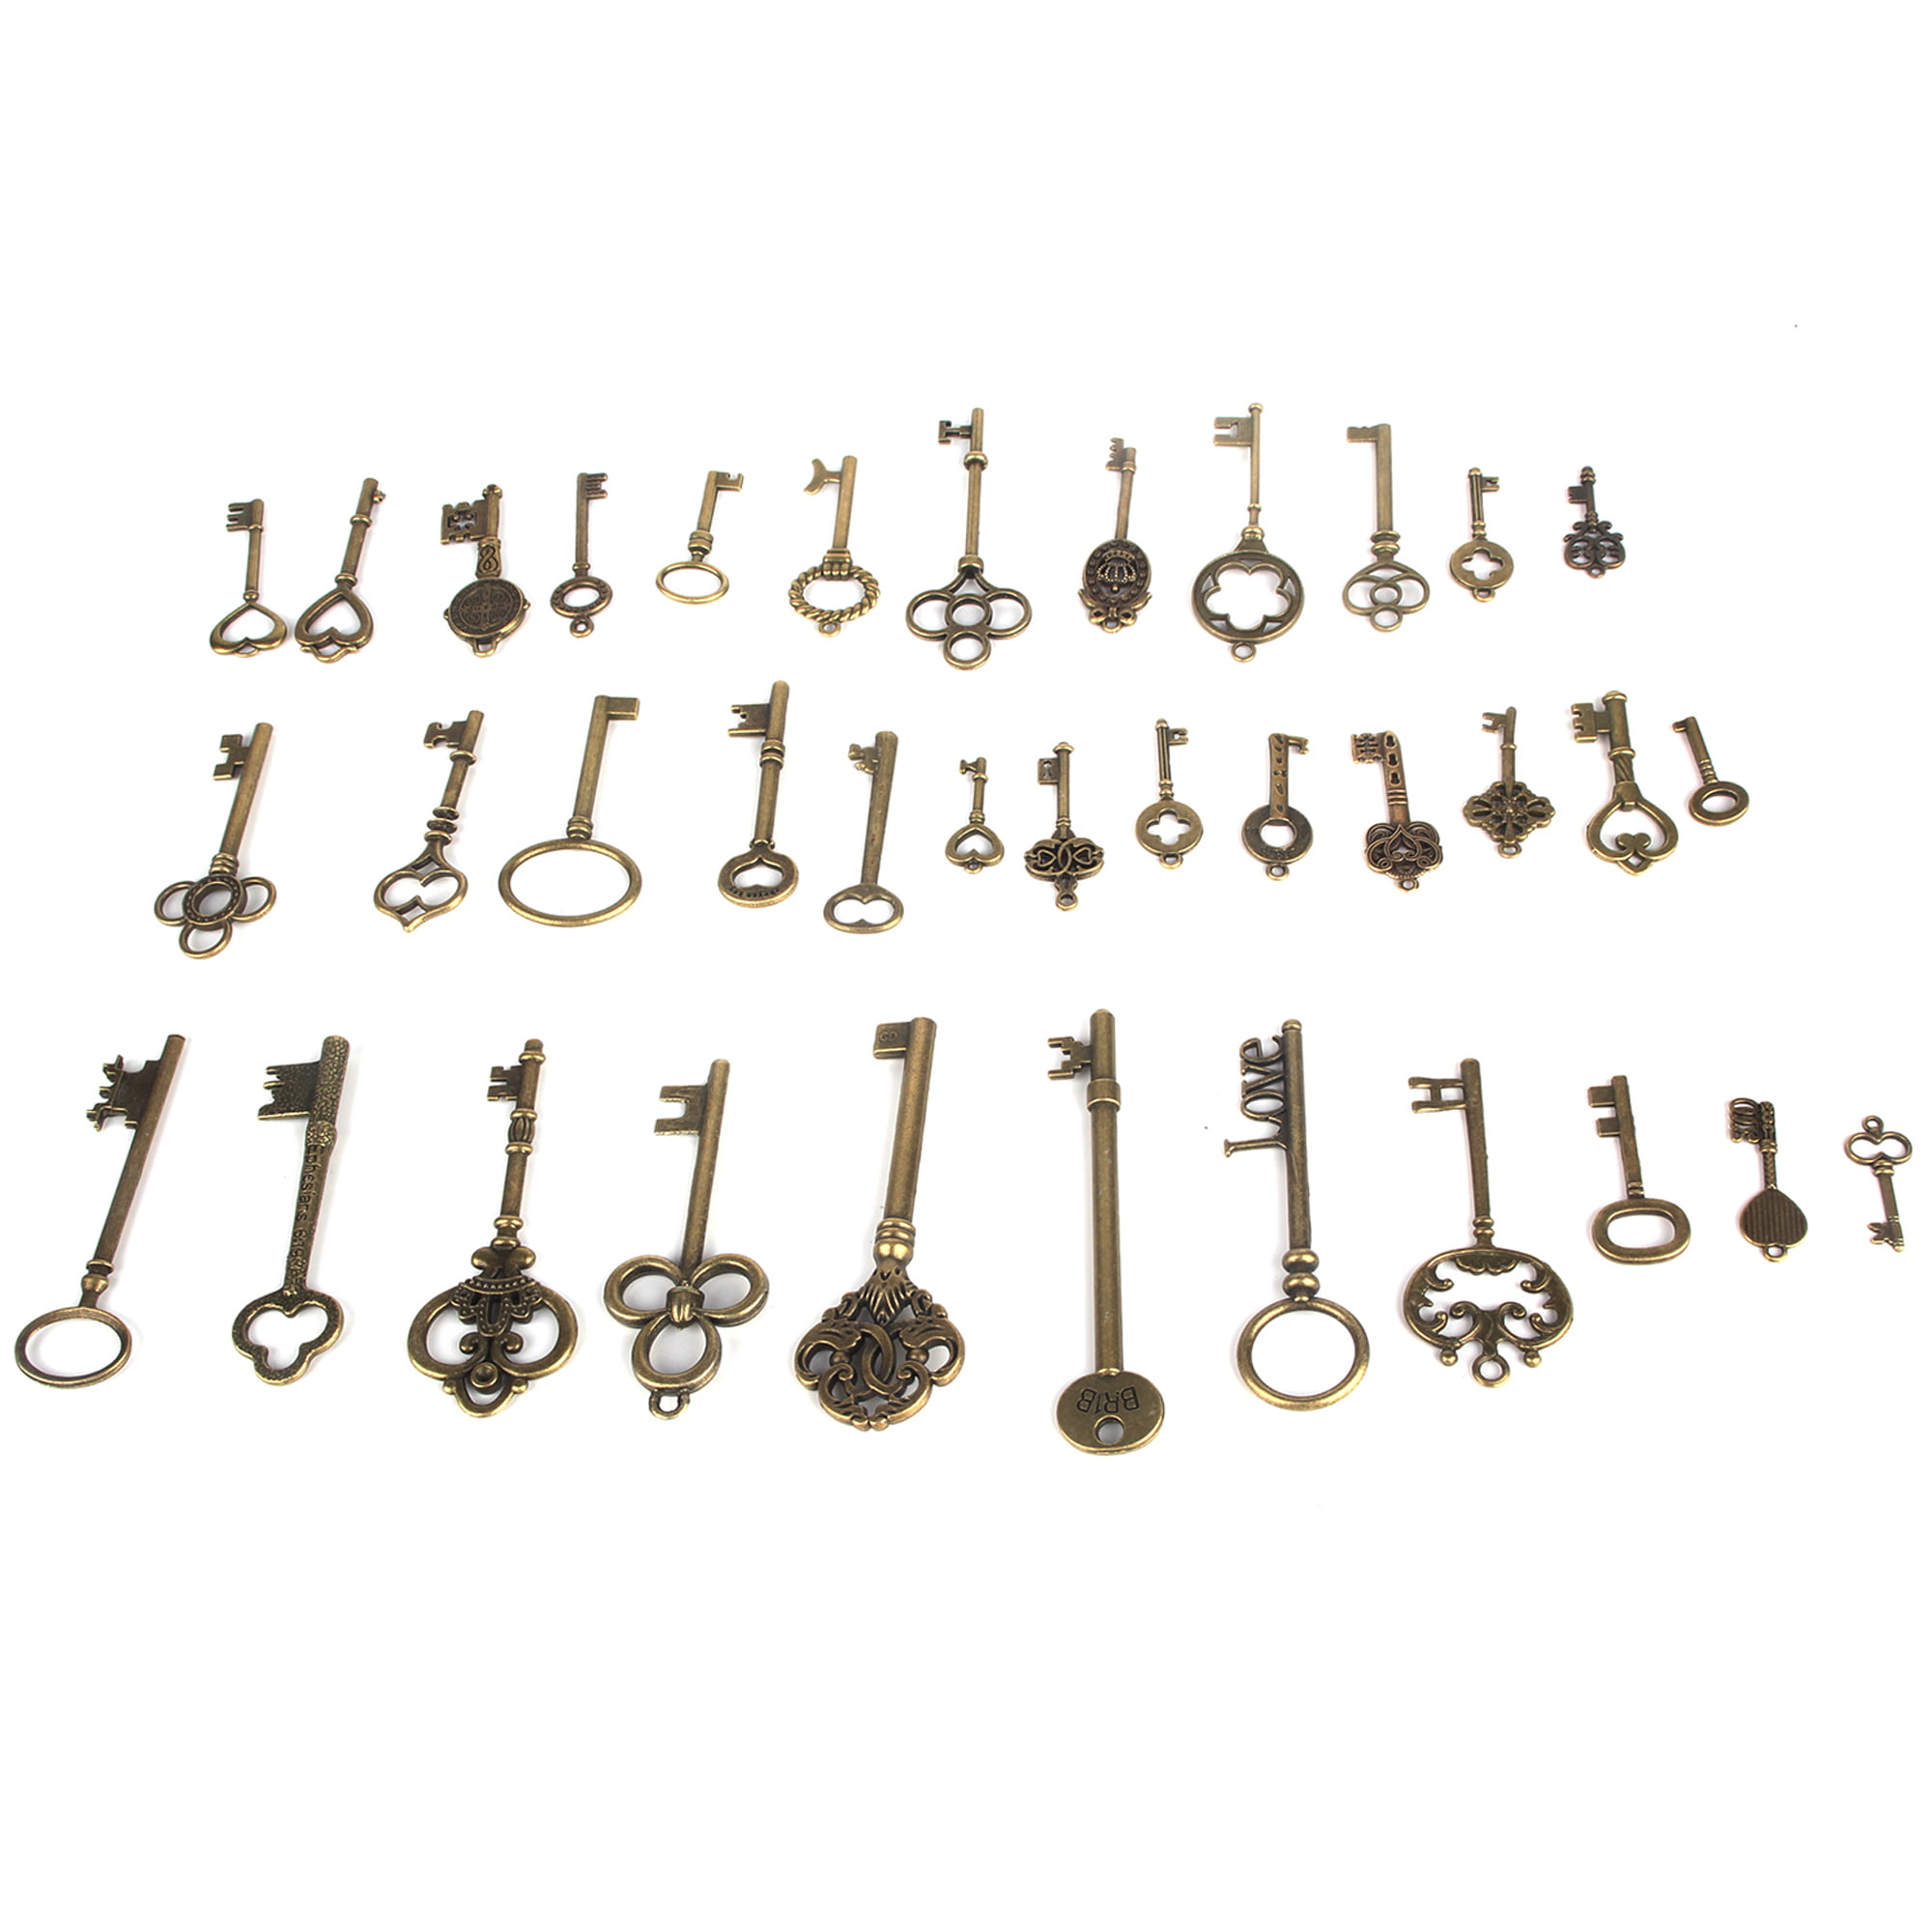 25 Skeleton Key Pendant Decor Wedding Keys Vintage Style Keys Antiqued Copper 